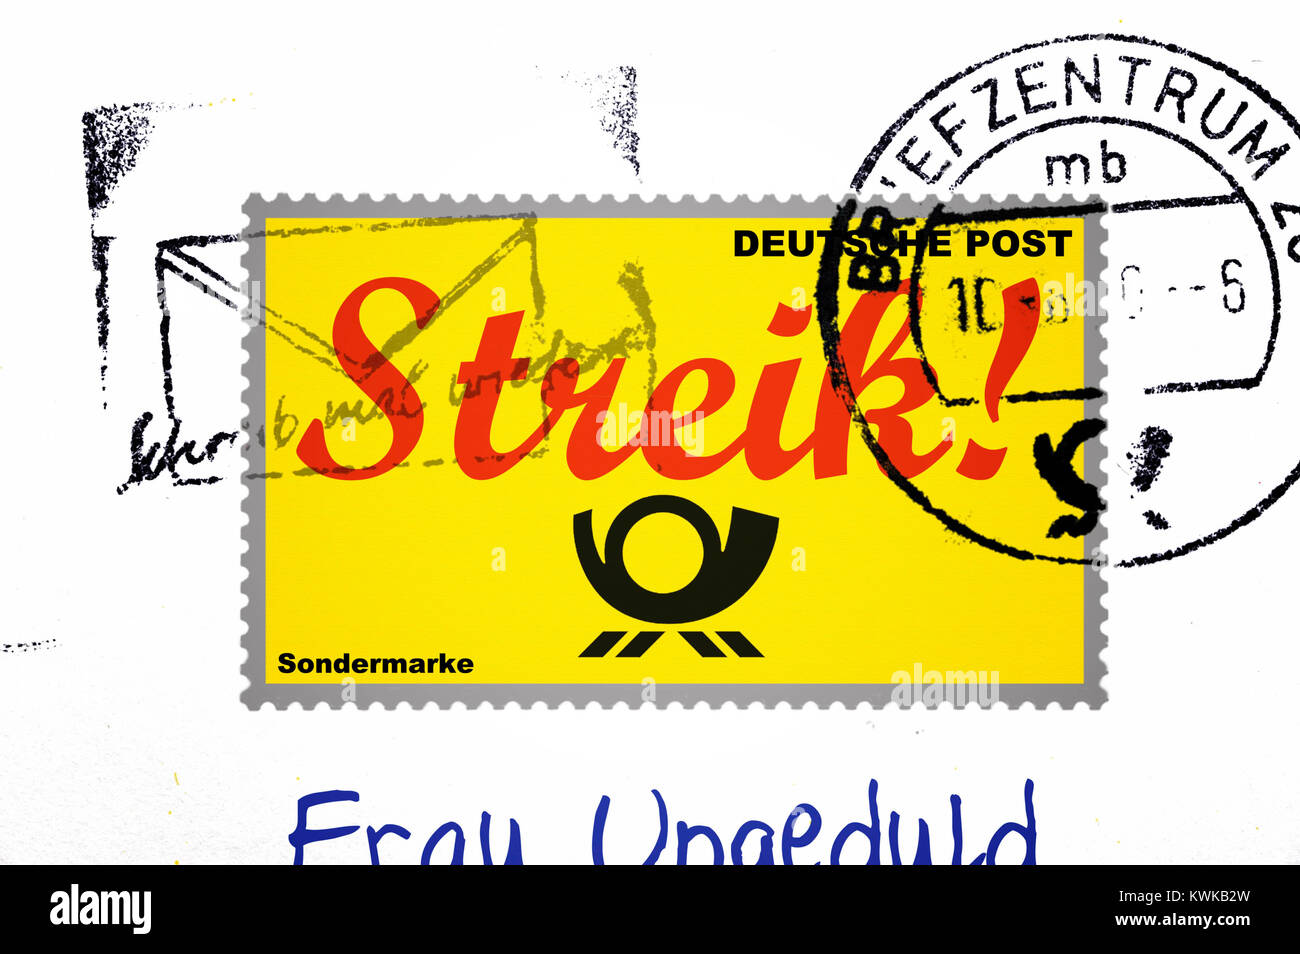 Stamp with strike stroke, symbolic photo postal strike, Briefmarke mit Streik-Schriftzug, Symbolfoto Post-Streik Stock Photo